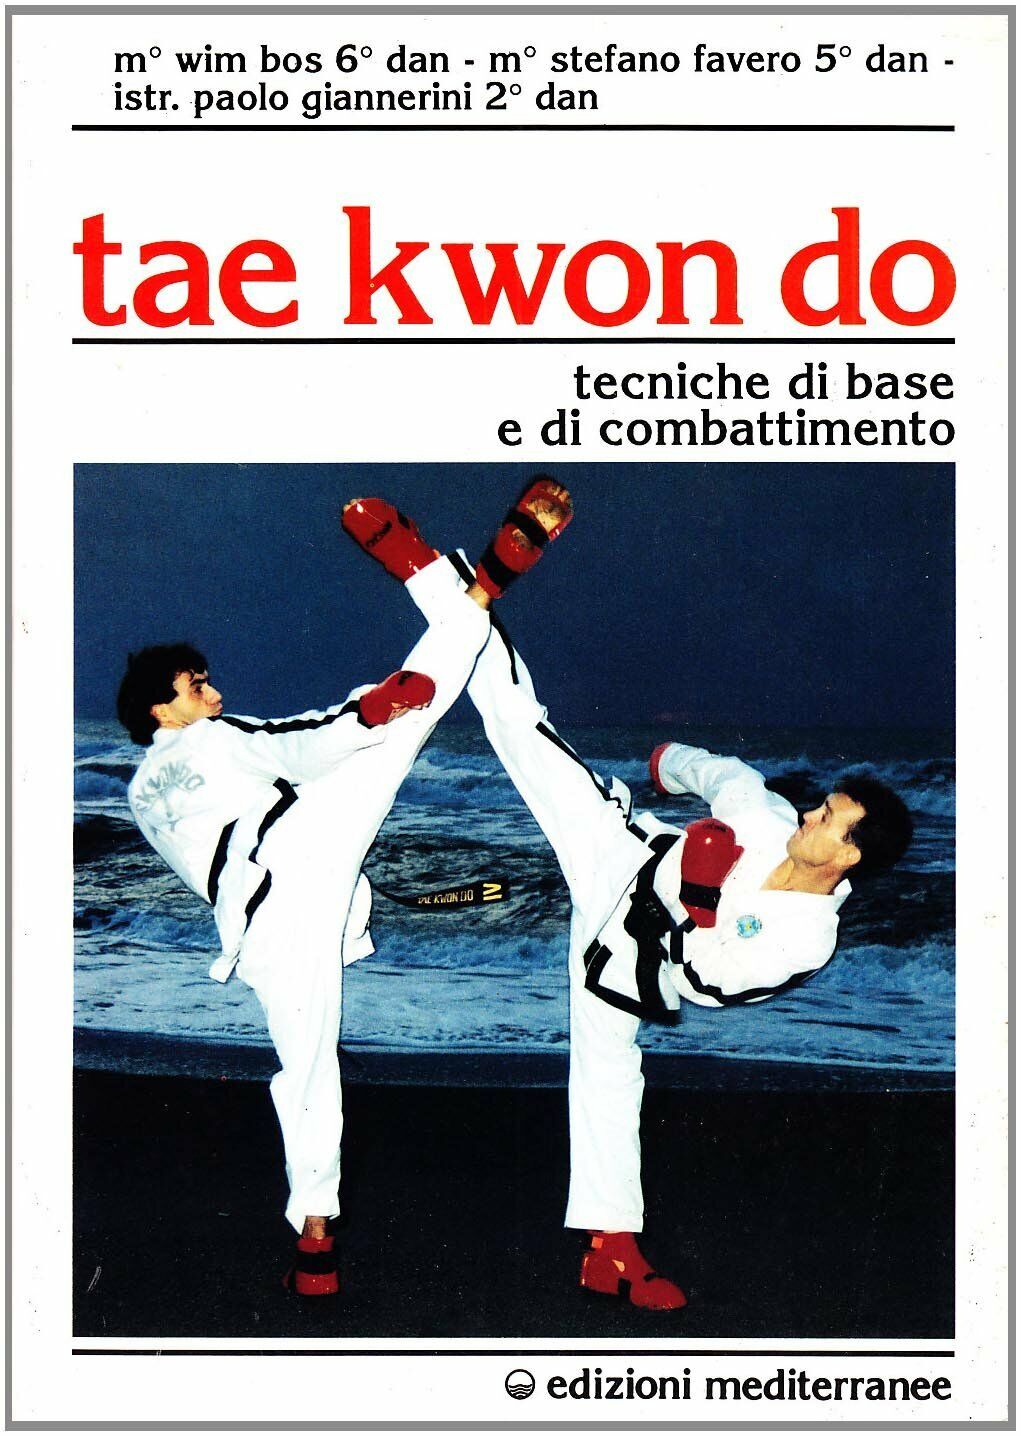 Tae kwon do - Wim Bos, Stefano Favero, Paolo Giannerini - Mediterranee, 1993